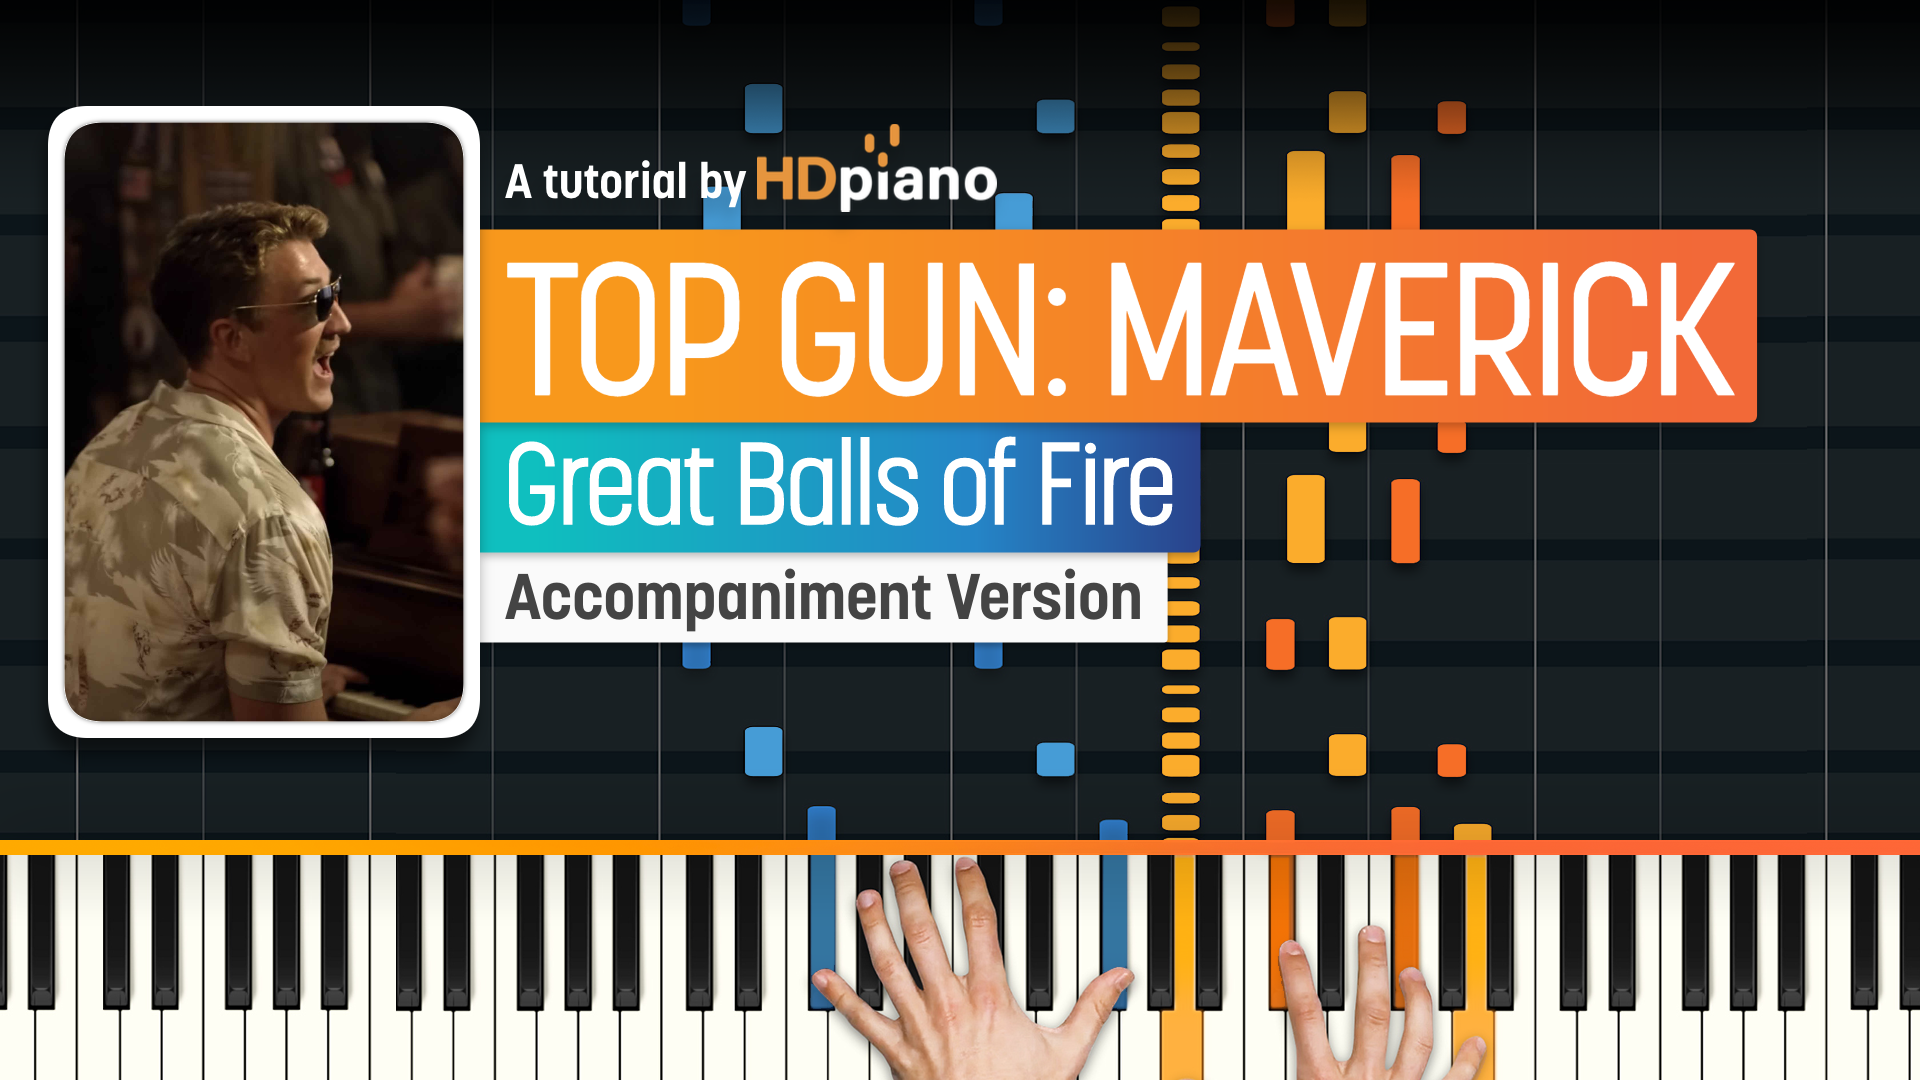 See Miles Teller's 'Great Balls of Fire' From 'Top Gun: Maverick